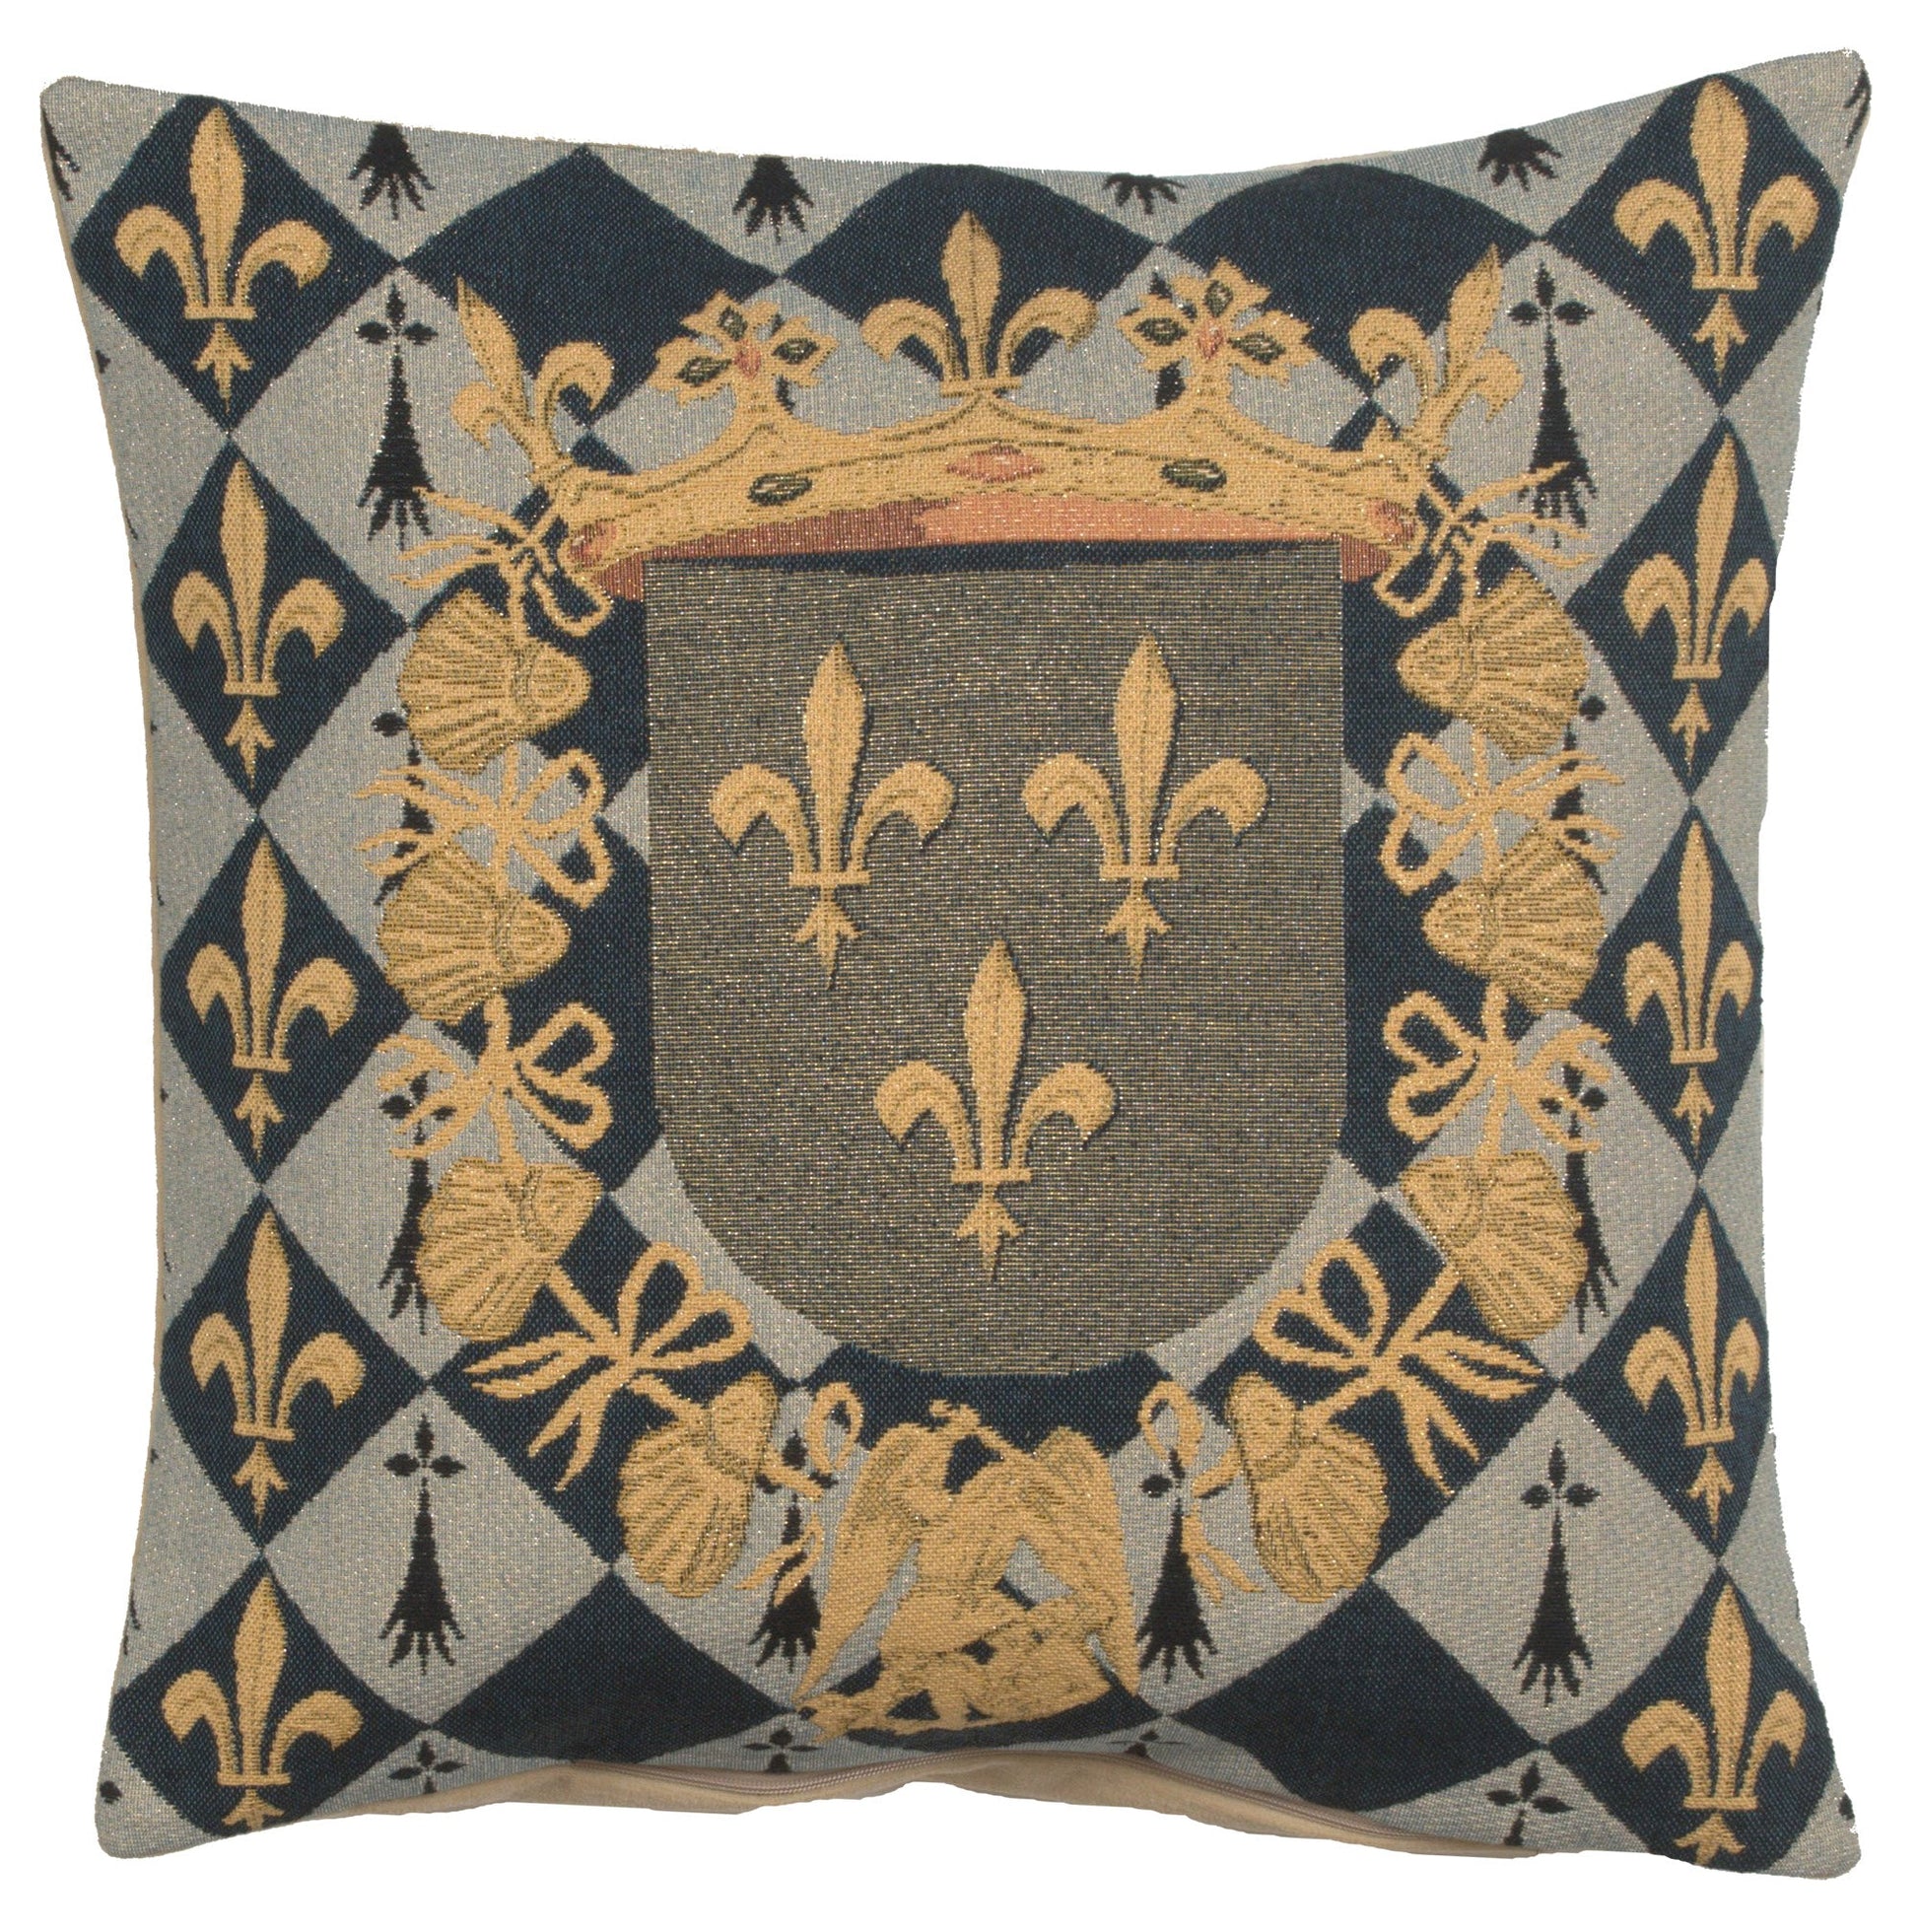 Medieval Crest I European Cushion Covers - RoseStraya.com